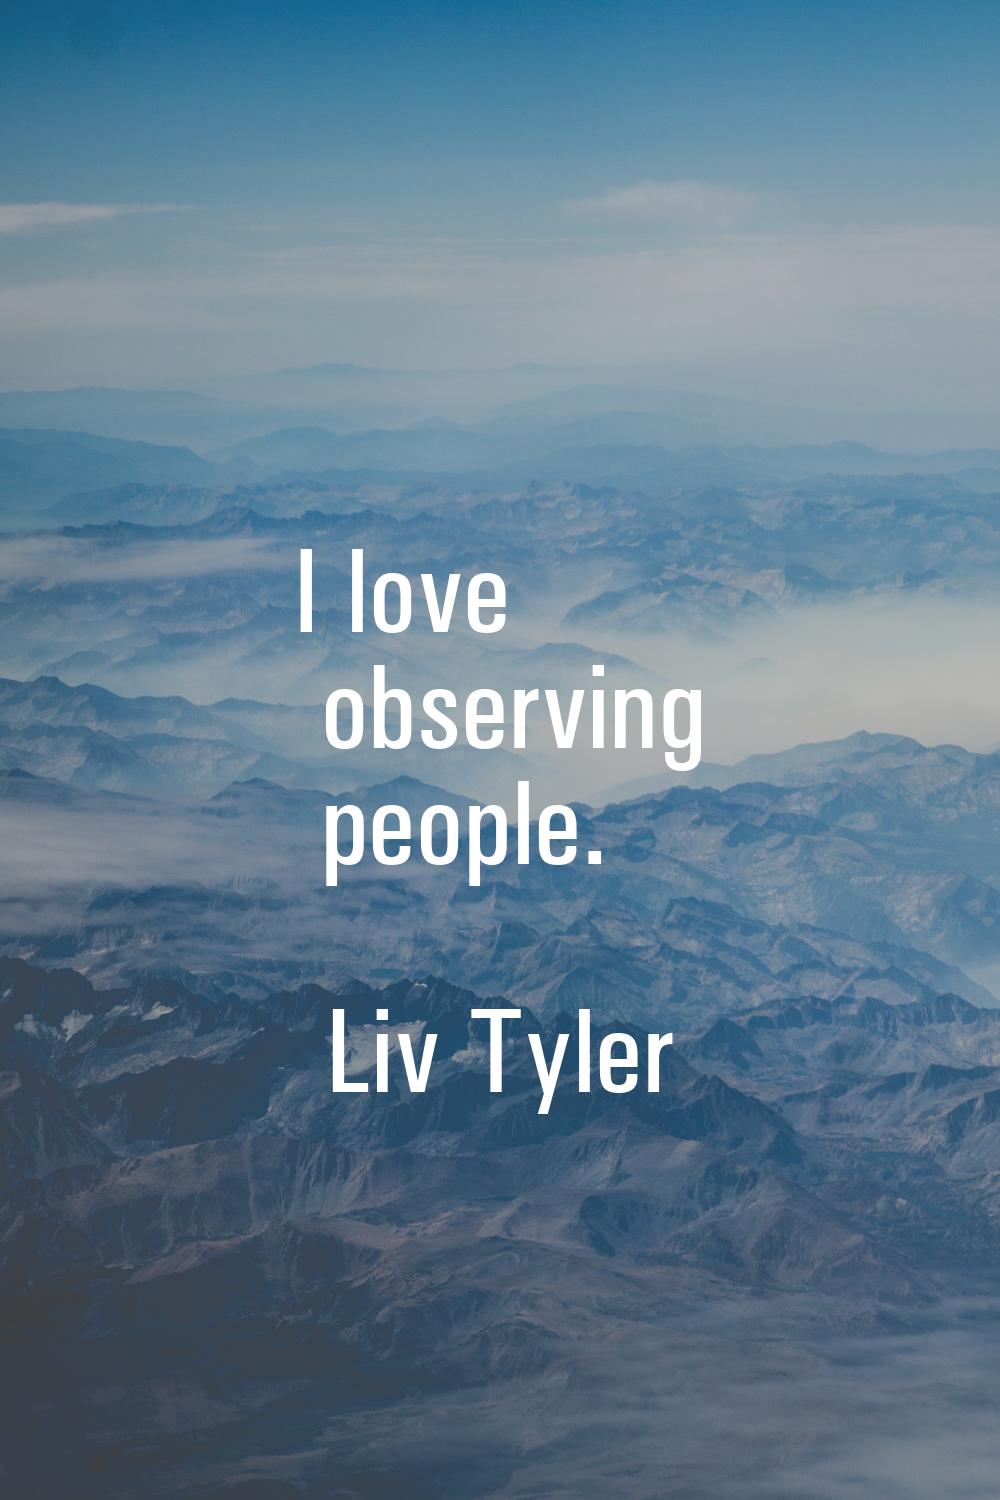 I love observing people.